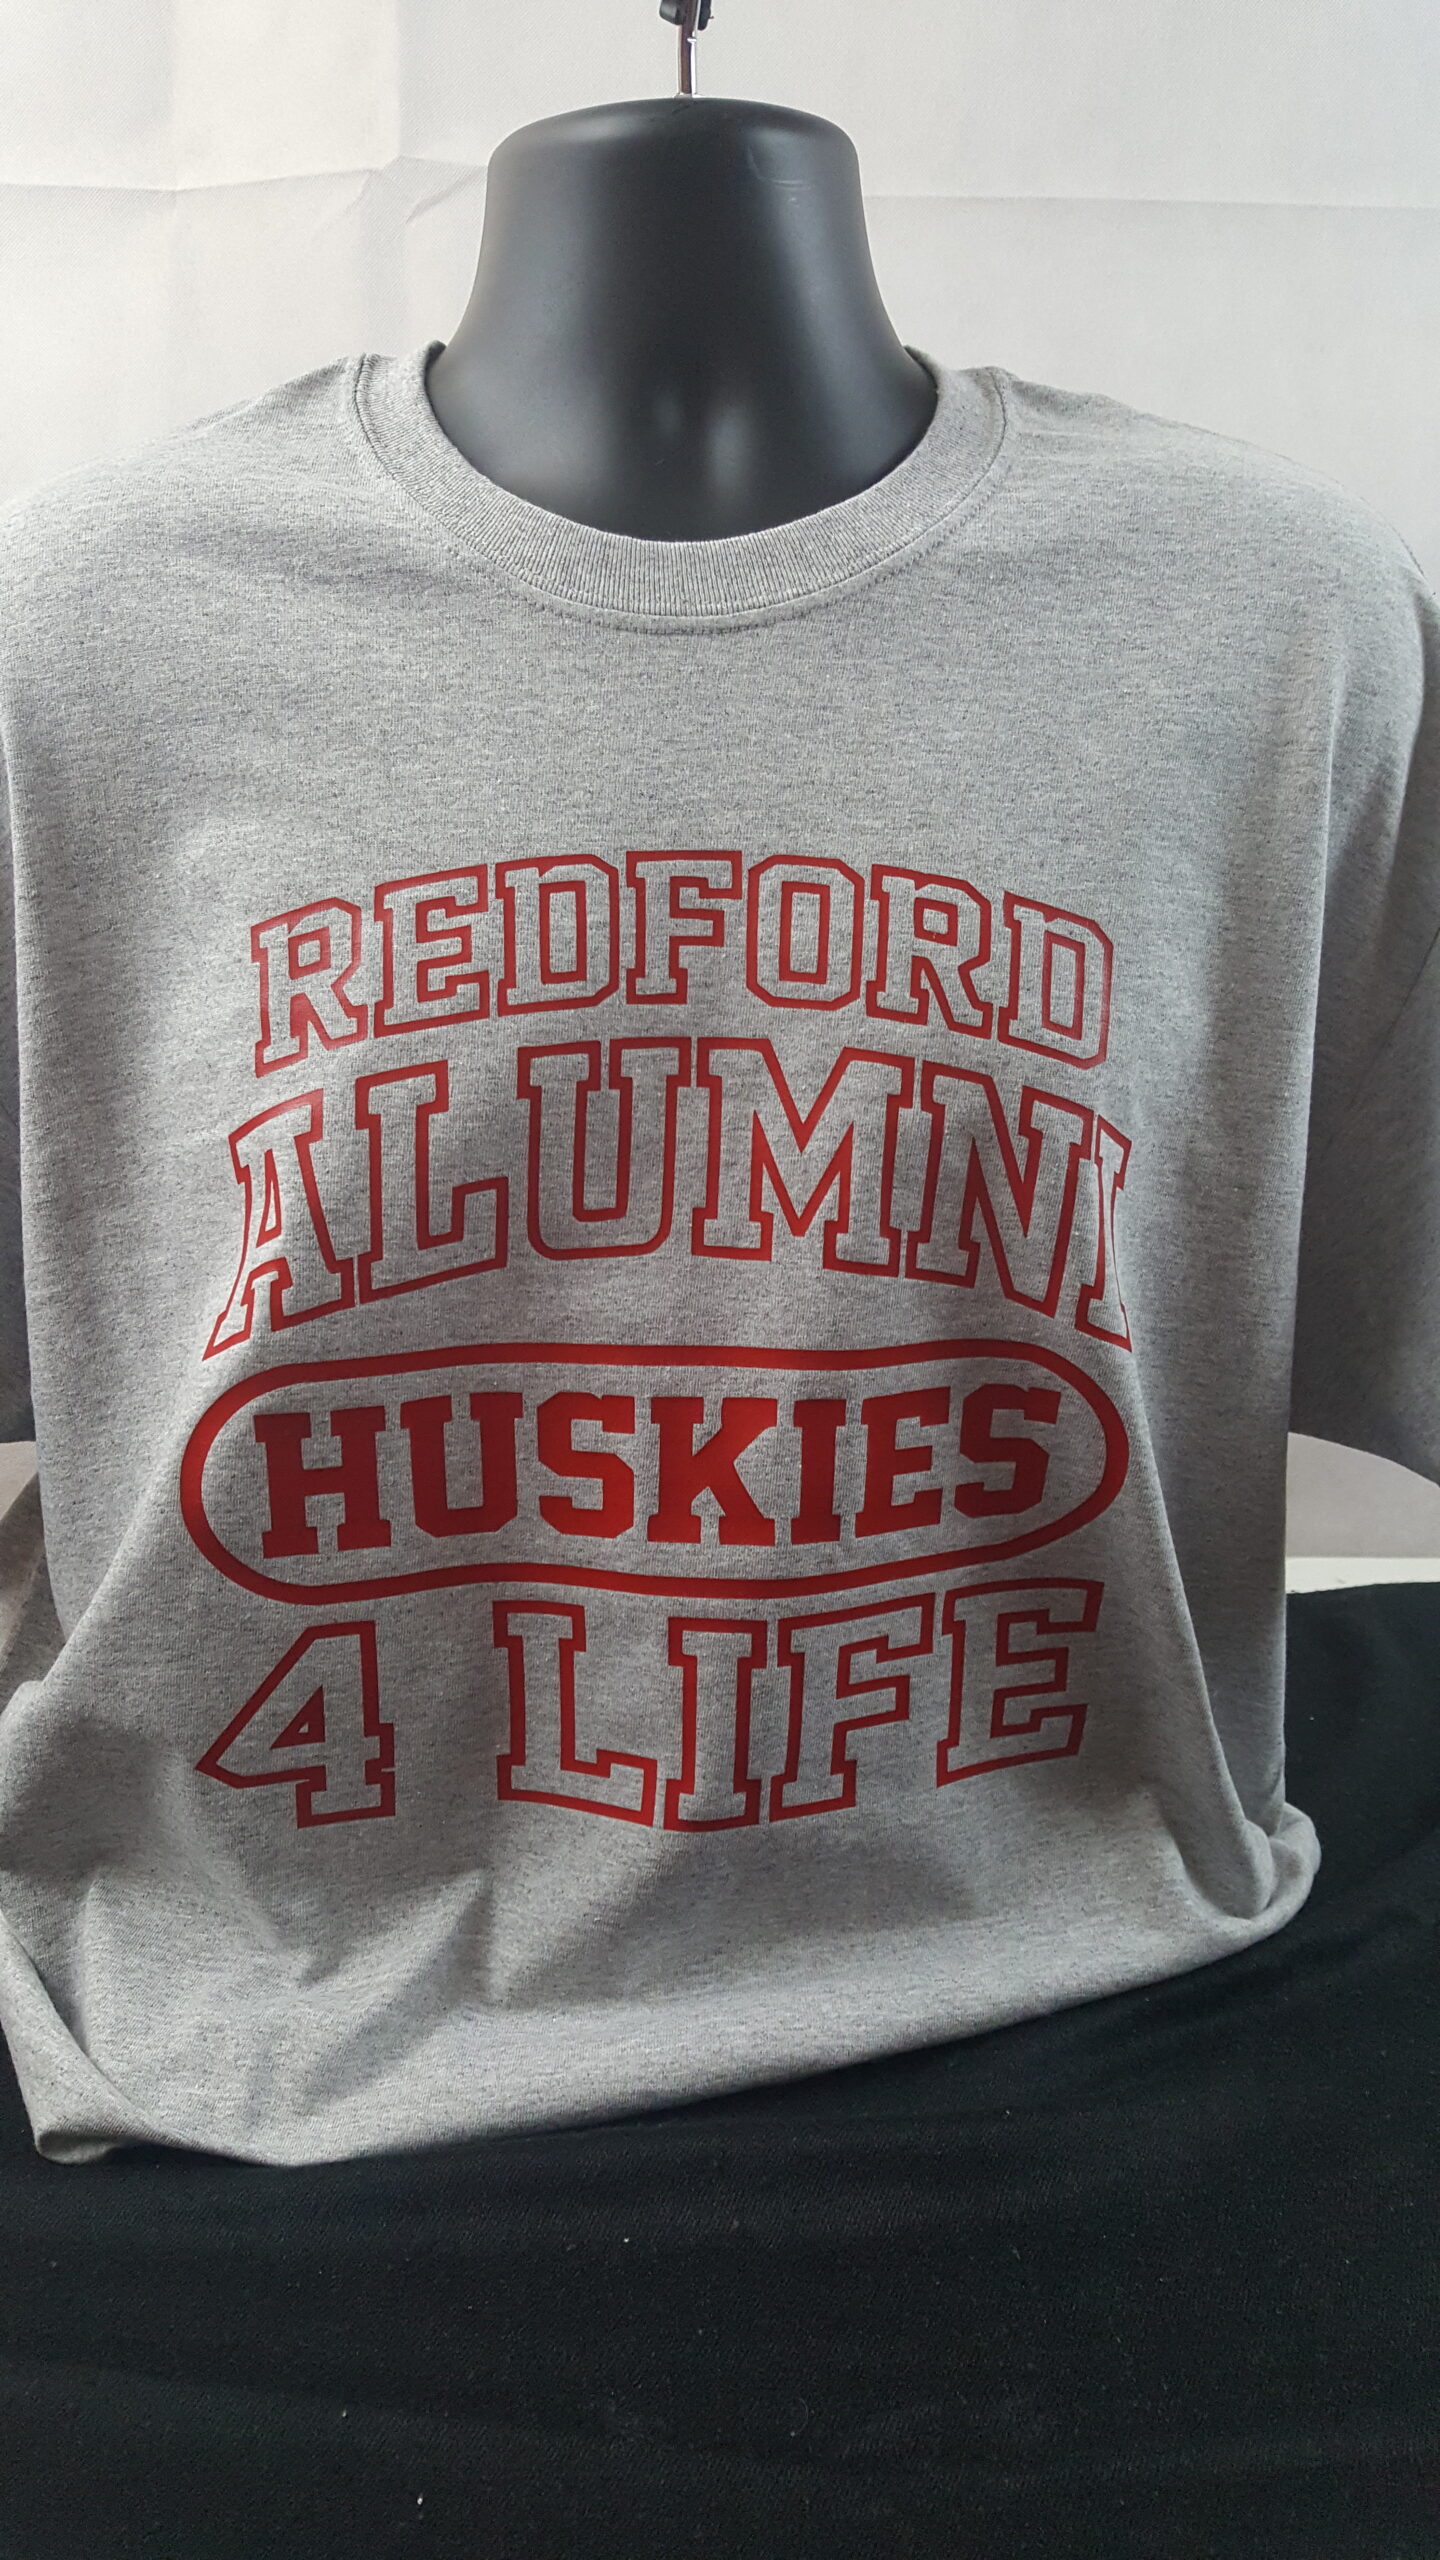 Redford Huskies Alumni 4 Life – The Alumni Brand – Detroit